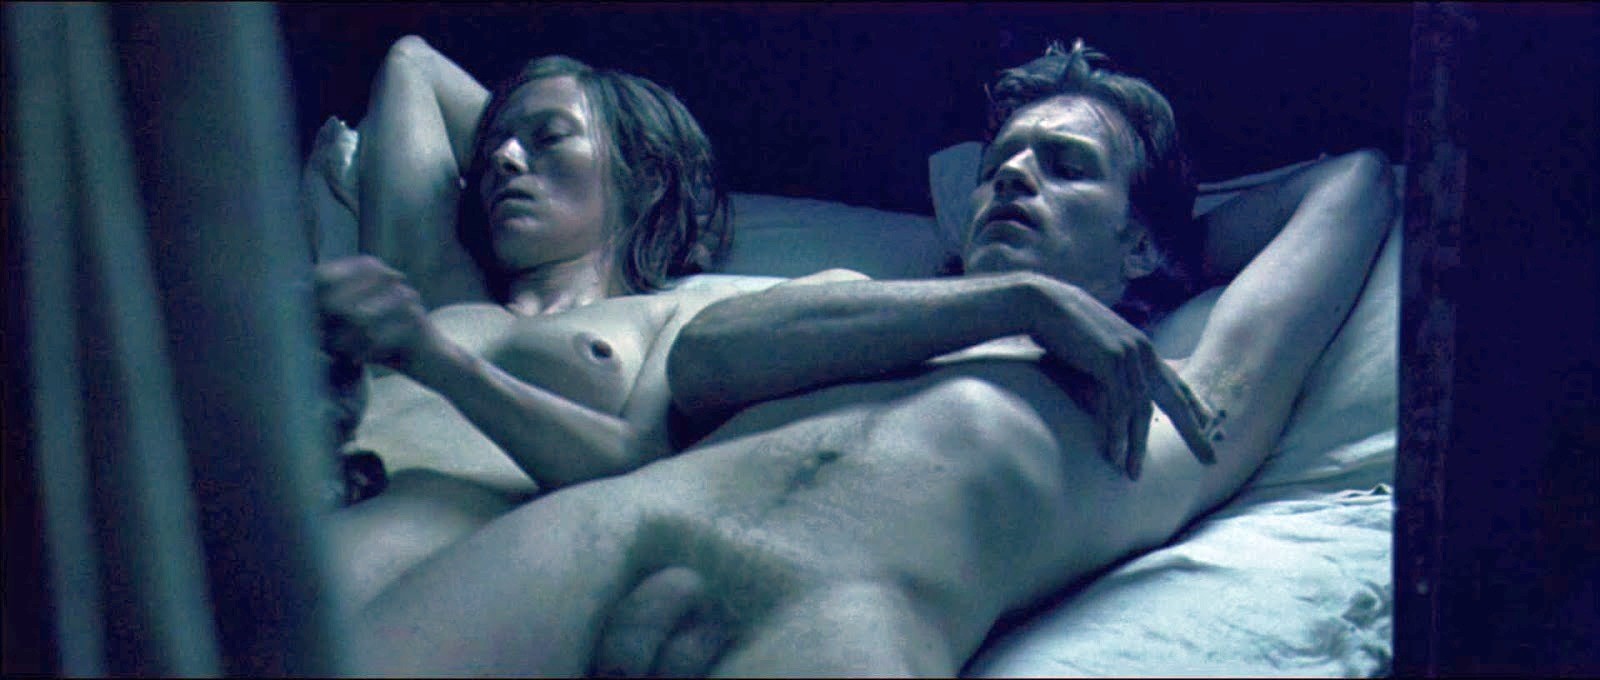 Ewan McGregor nudo in "Young Adam" (2003) - Nudi al cinema